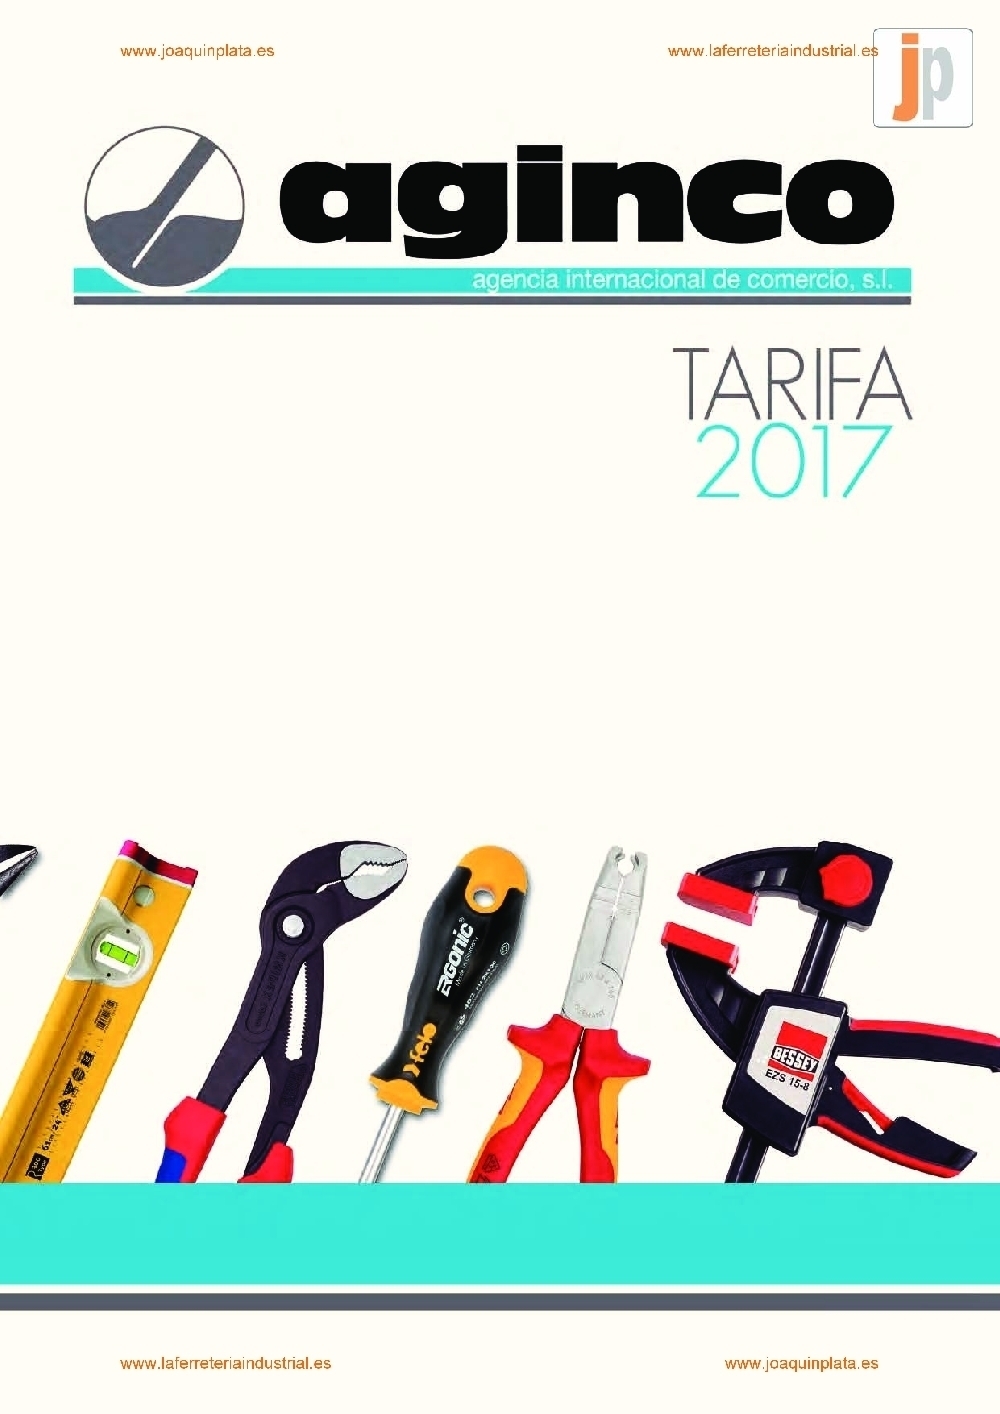 Aginco Catálogo Tarifa 2017